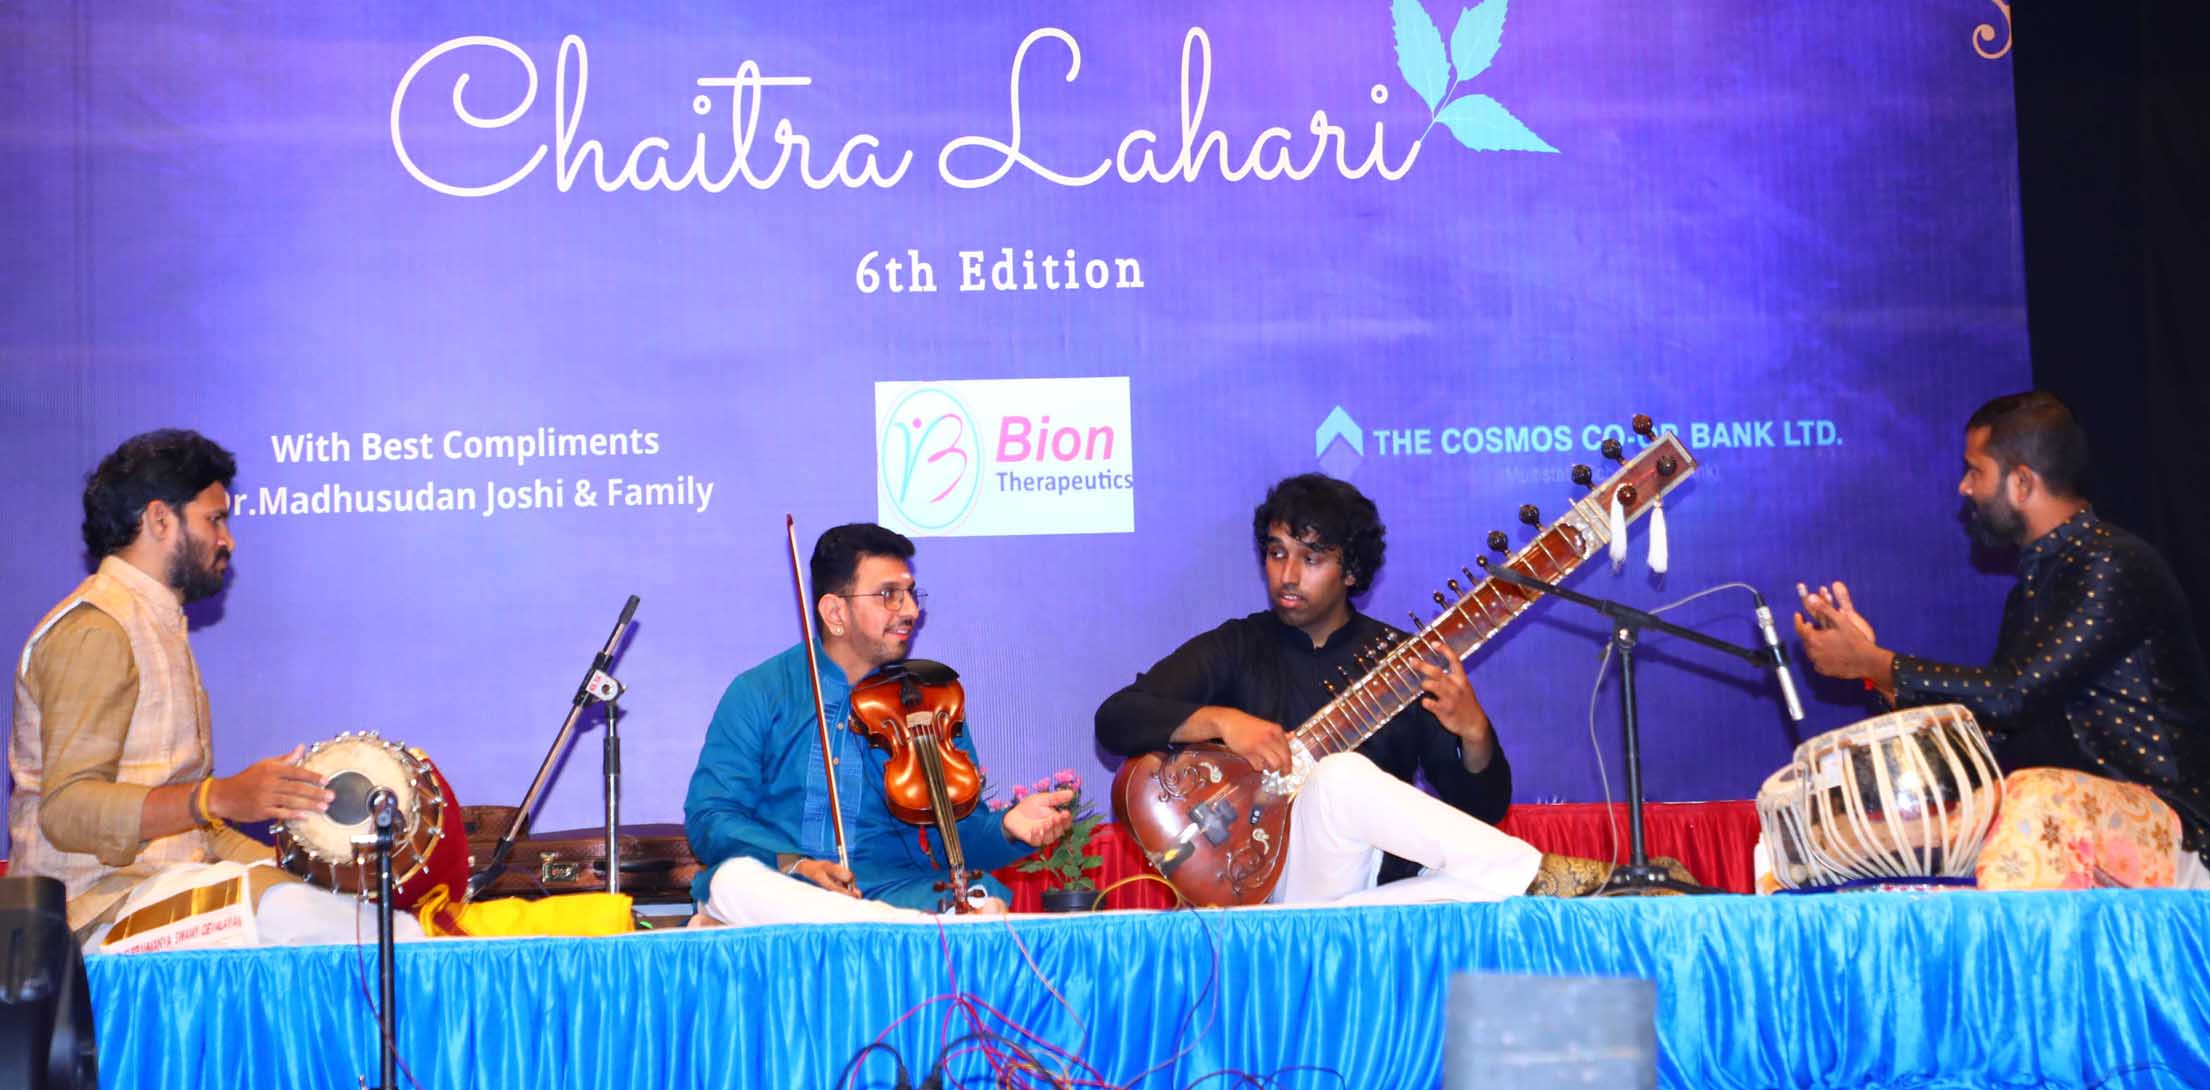 Chaitra Lahari featuring three performances held Sunday night at Ravindra Bharathi